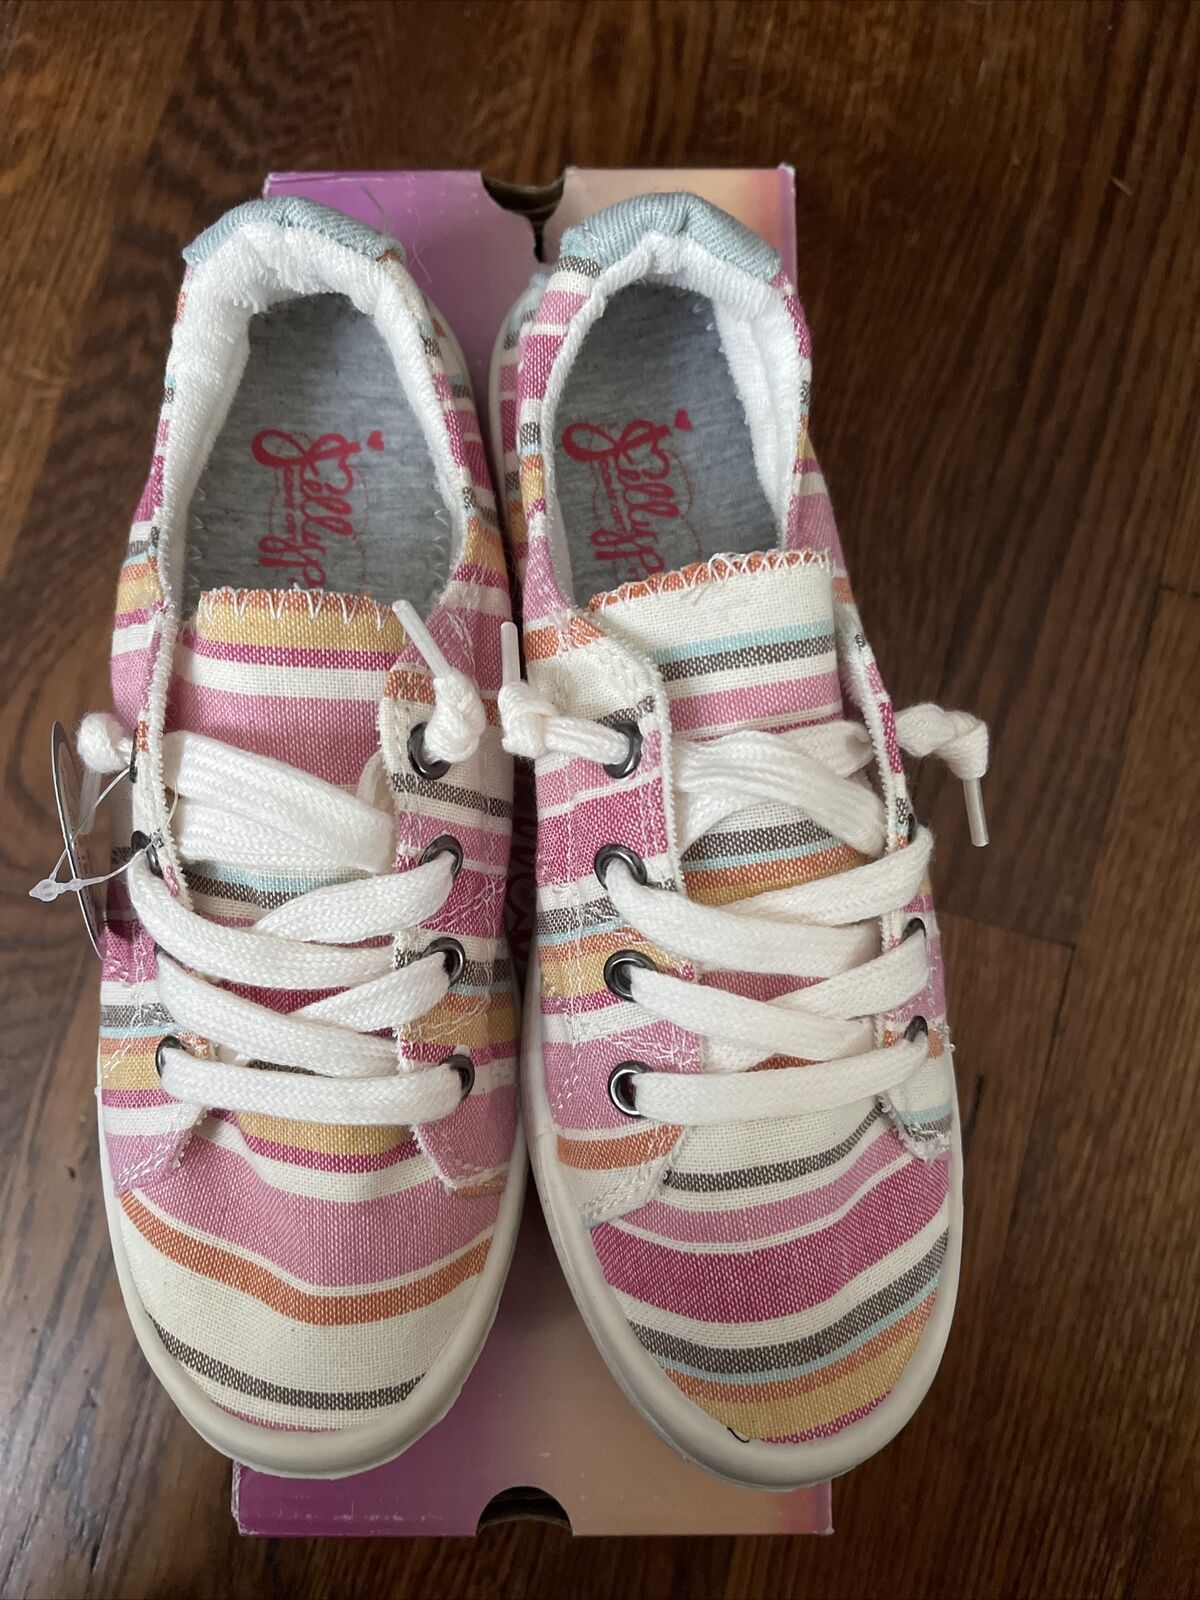 New Women’s Jelly Pop Sneaker Shoes Dallas Pink Multi Striped Fabric Shoes Sz 6